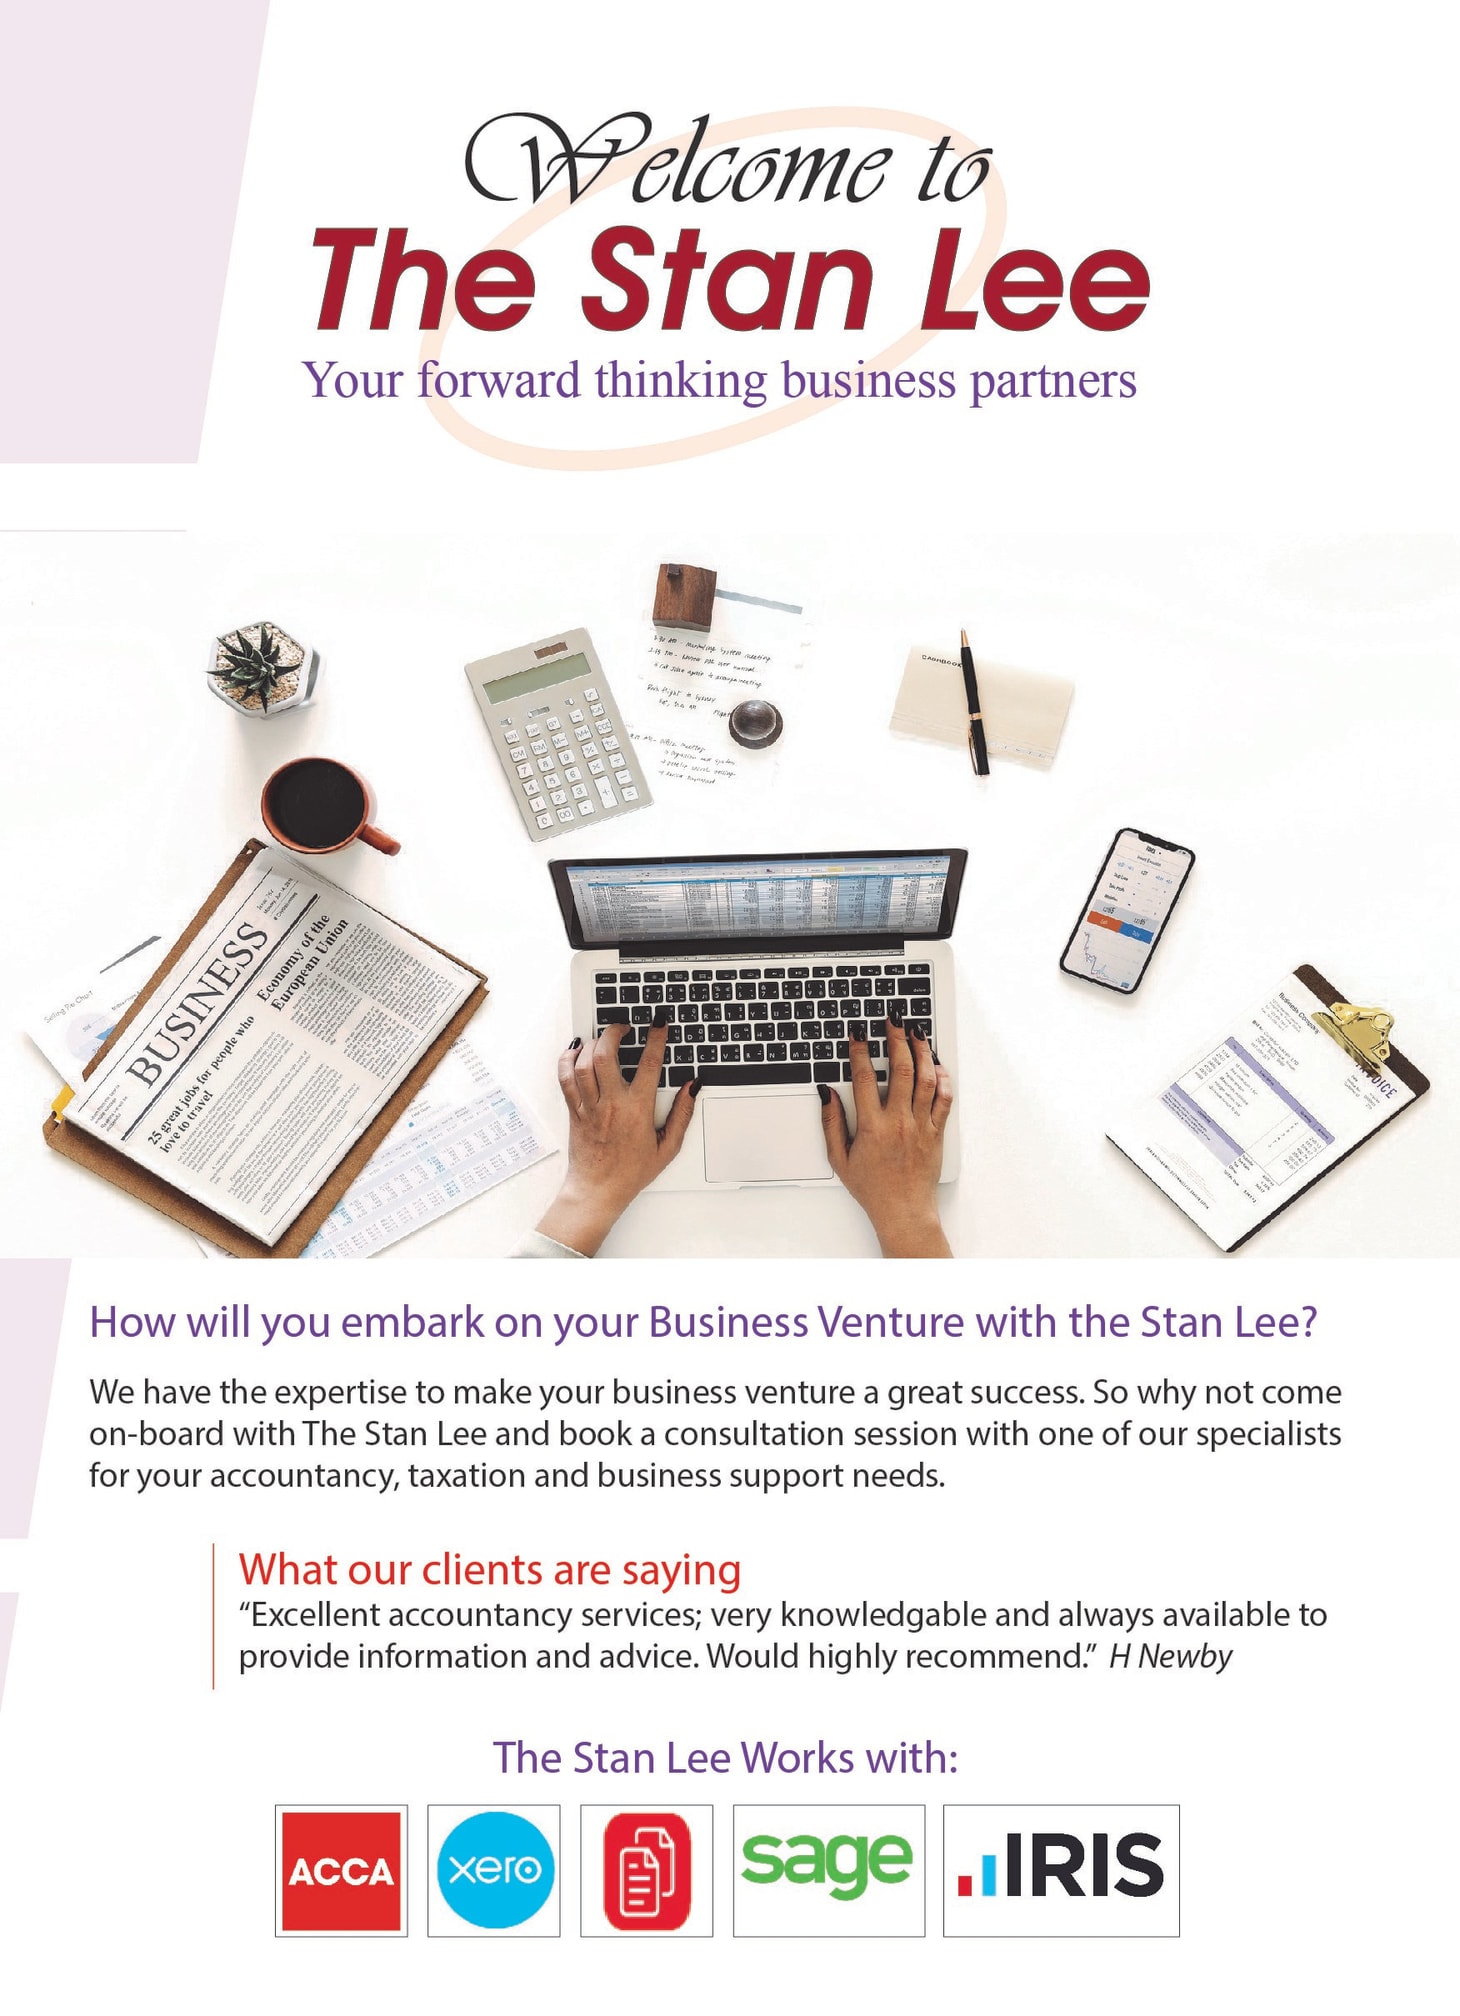 Images Stan Lee Accountancy Ltd